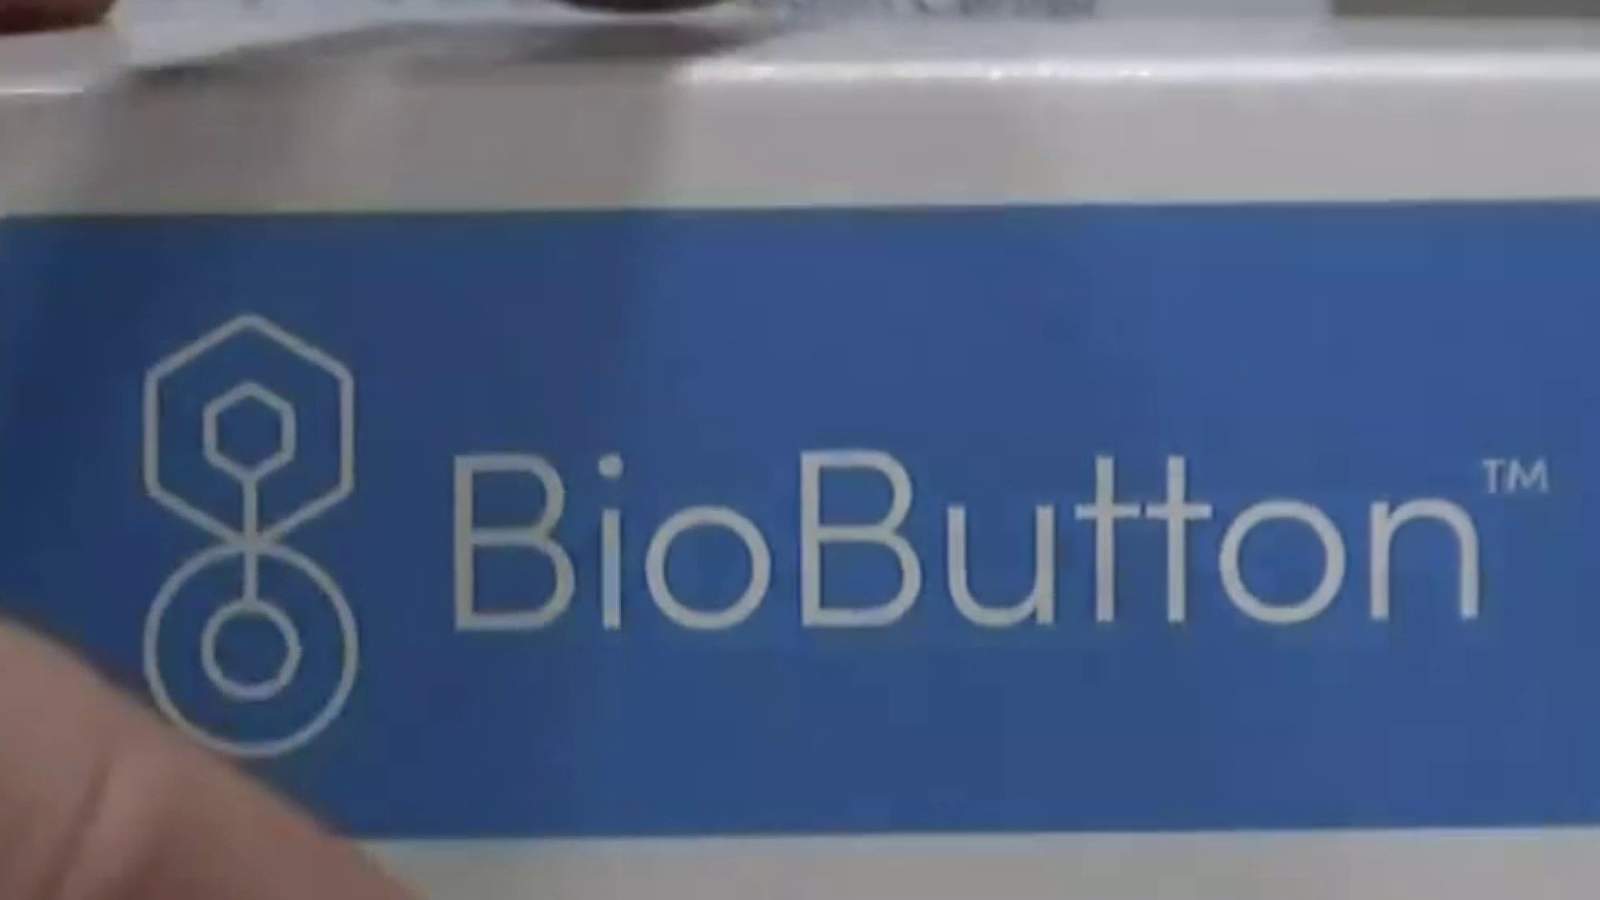 Oakland University puts ‘BioButton’ to use to help prevent COVID spread